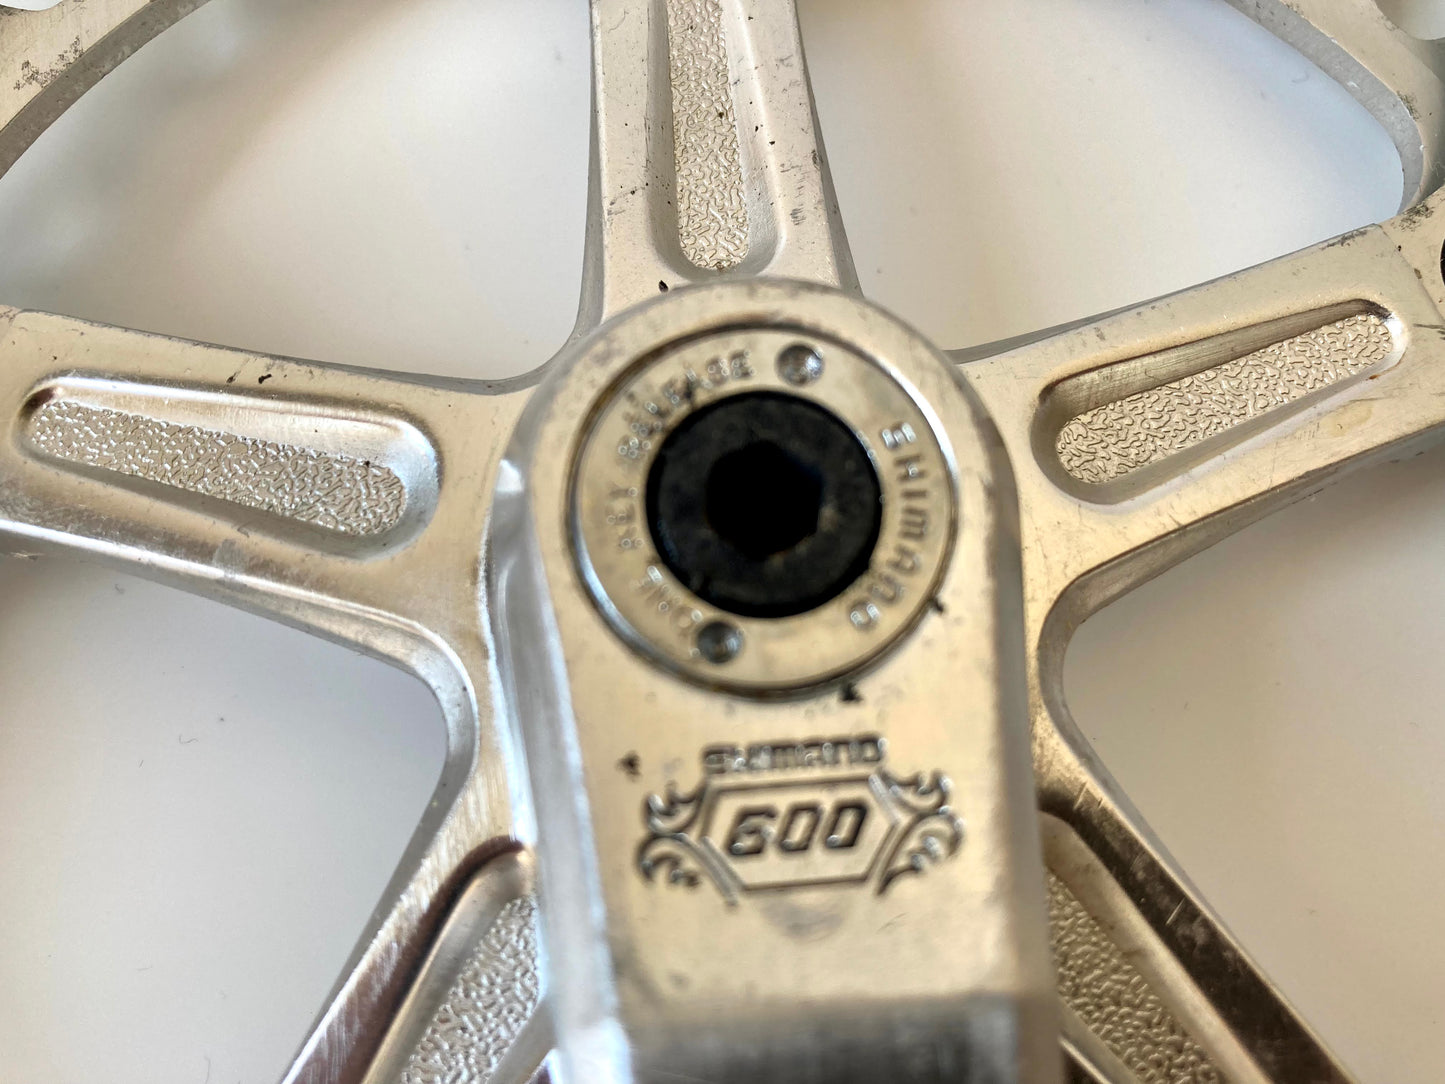 Shimano 600 Arabesque crank set complete FC-6200 Fahrradkurbel